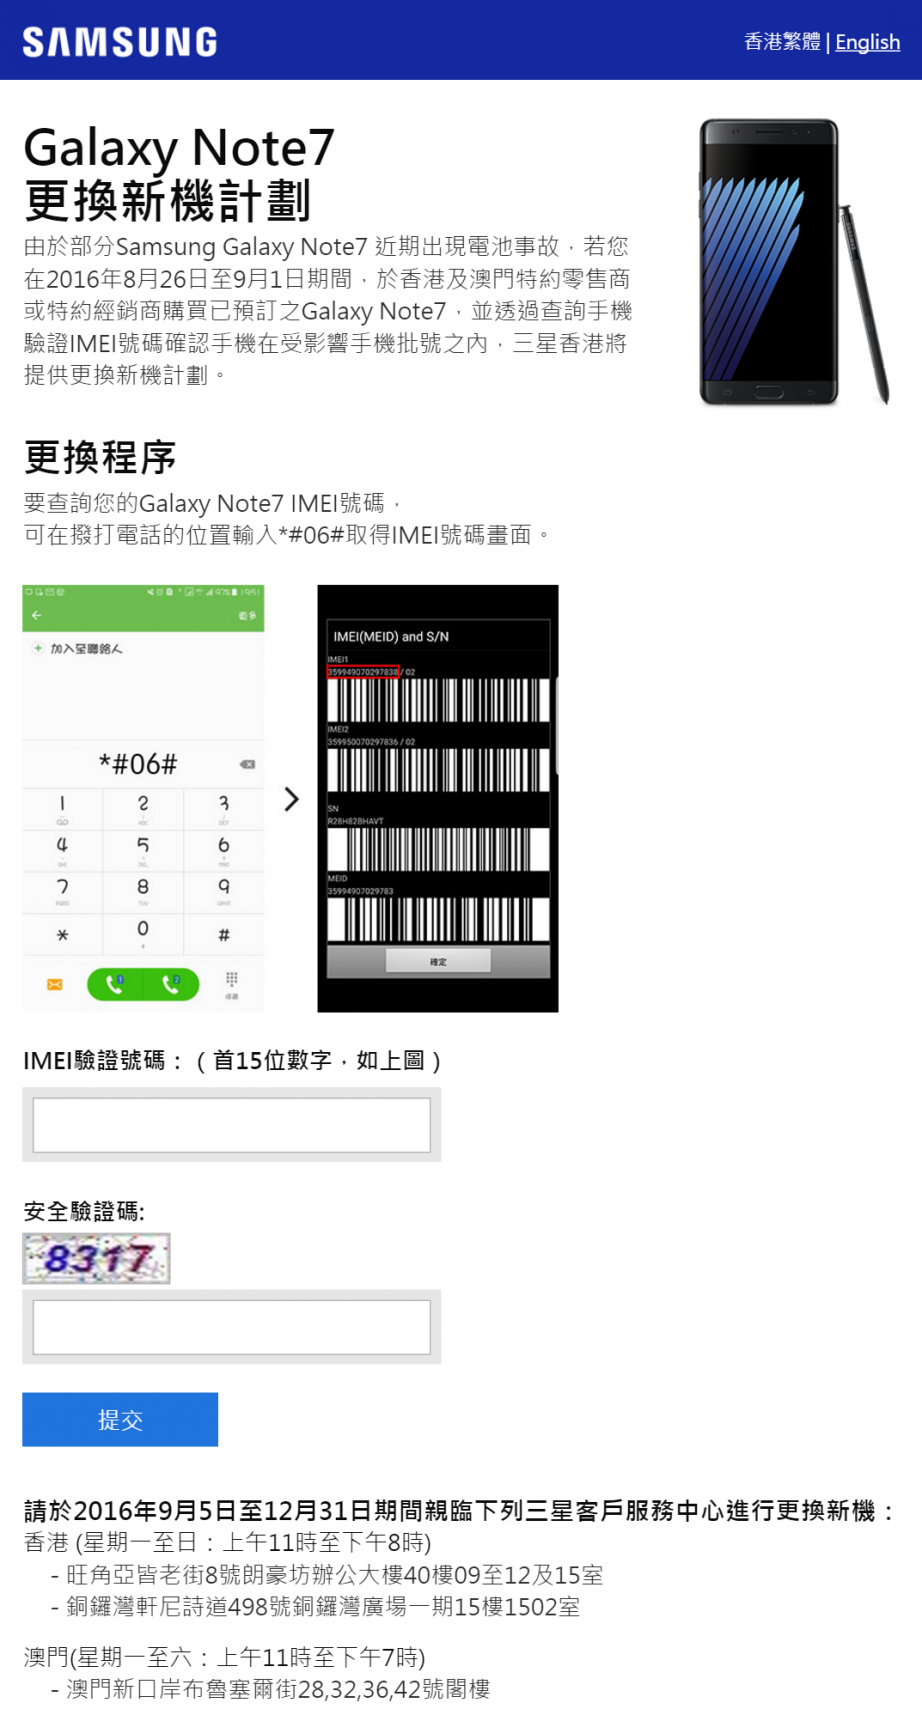 2016-09-05 16_00_57-Galaxy Note7 Checking _ SAMSUNG 香港 - Chrome.png